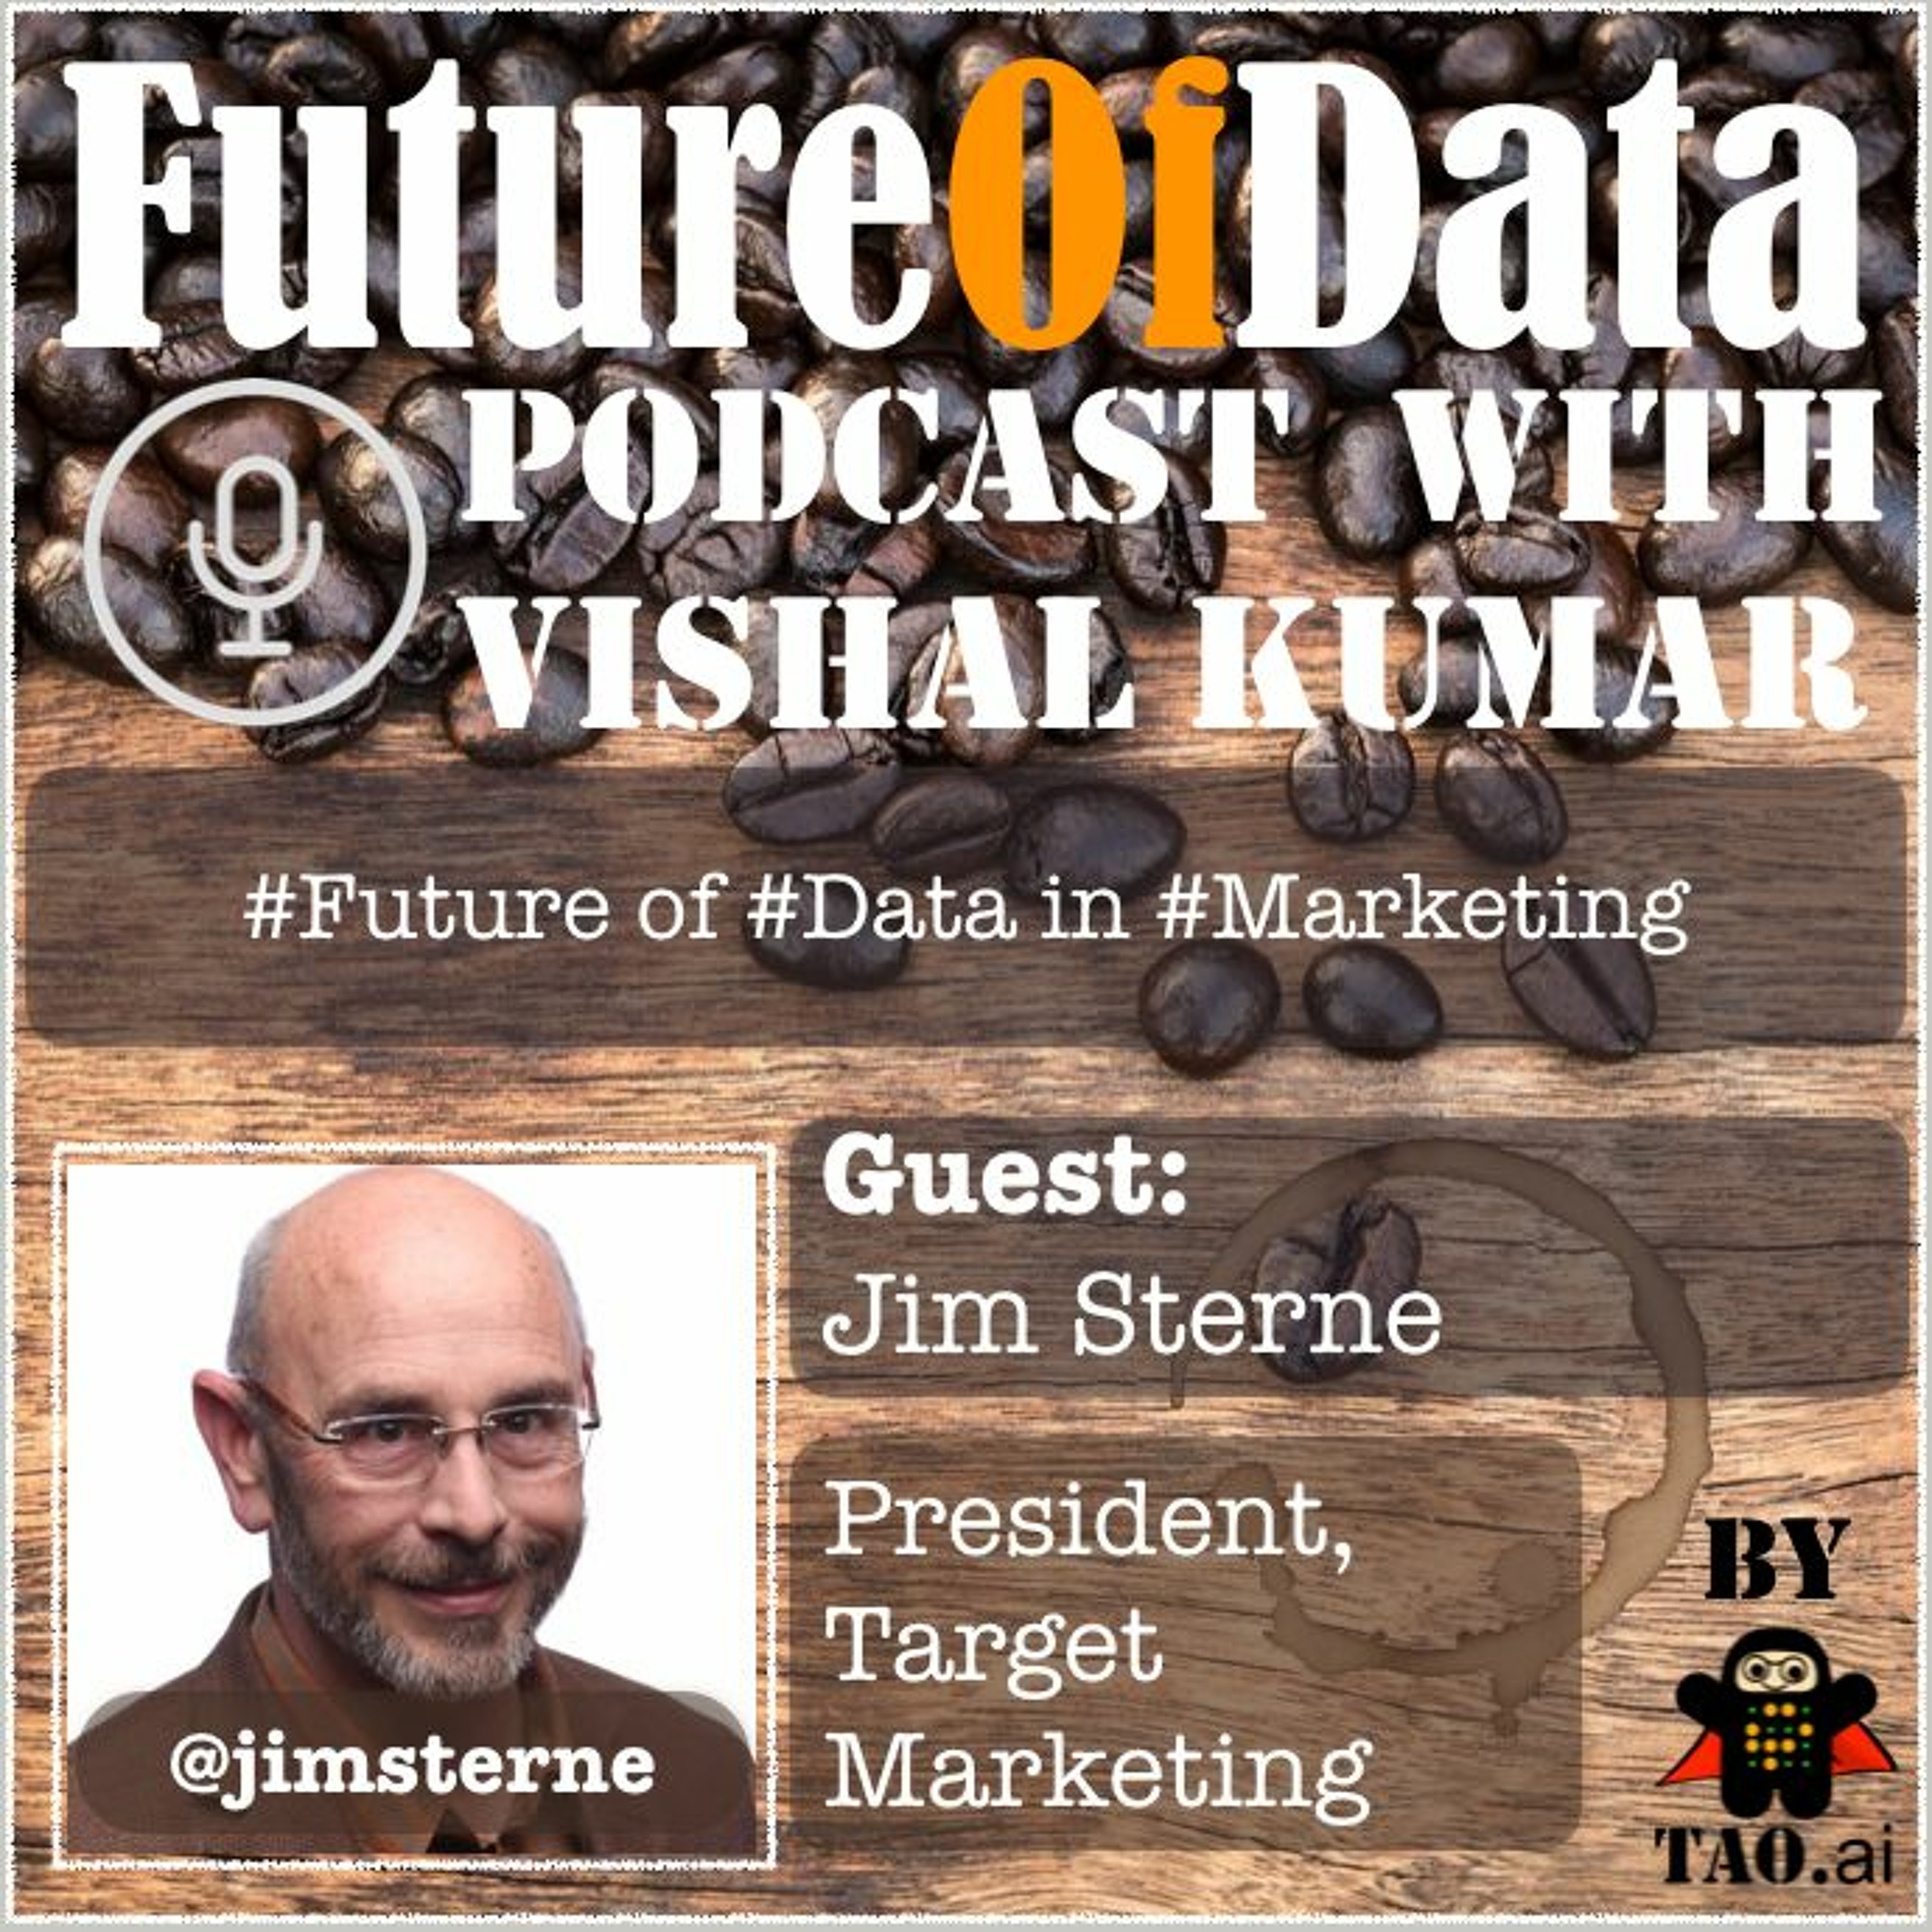 #Future of #Data in #Marketing & #Digital - @JimSterne